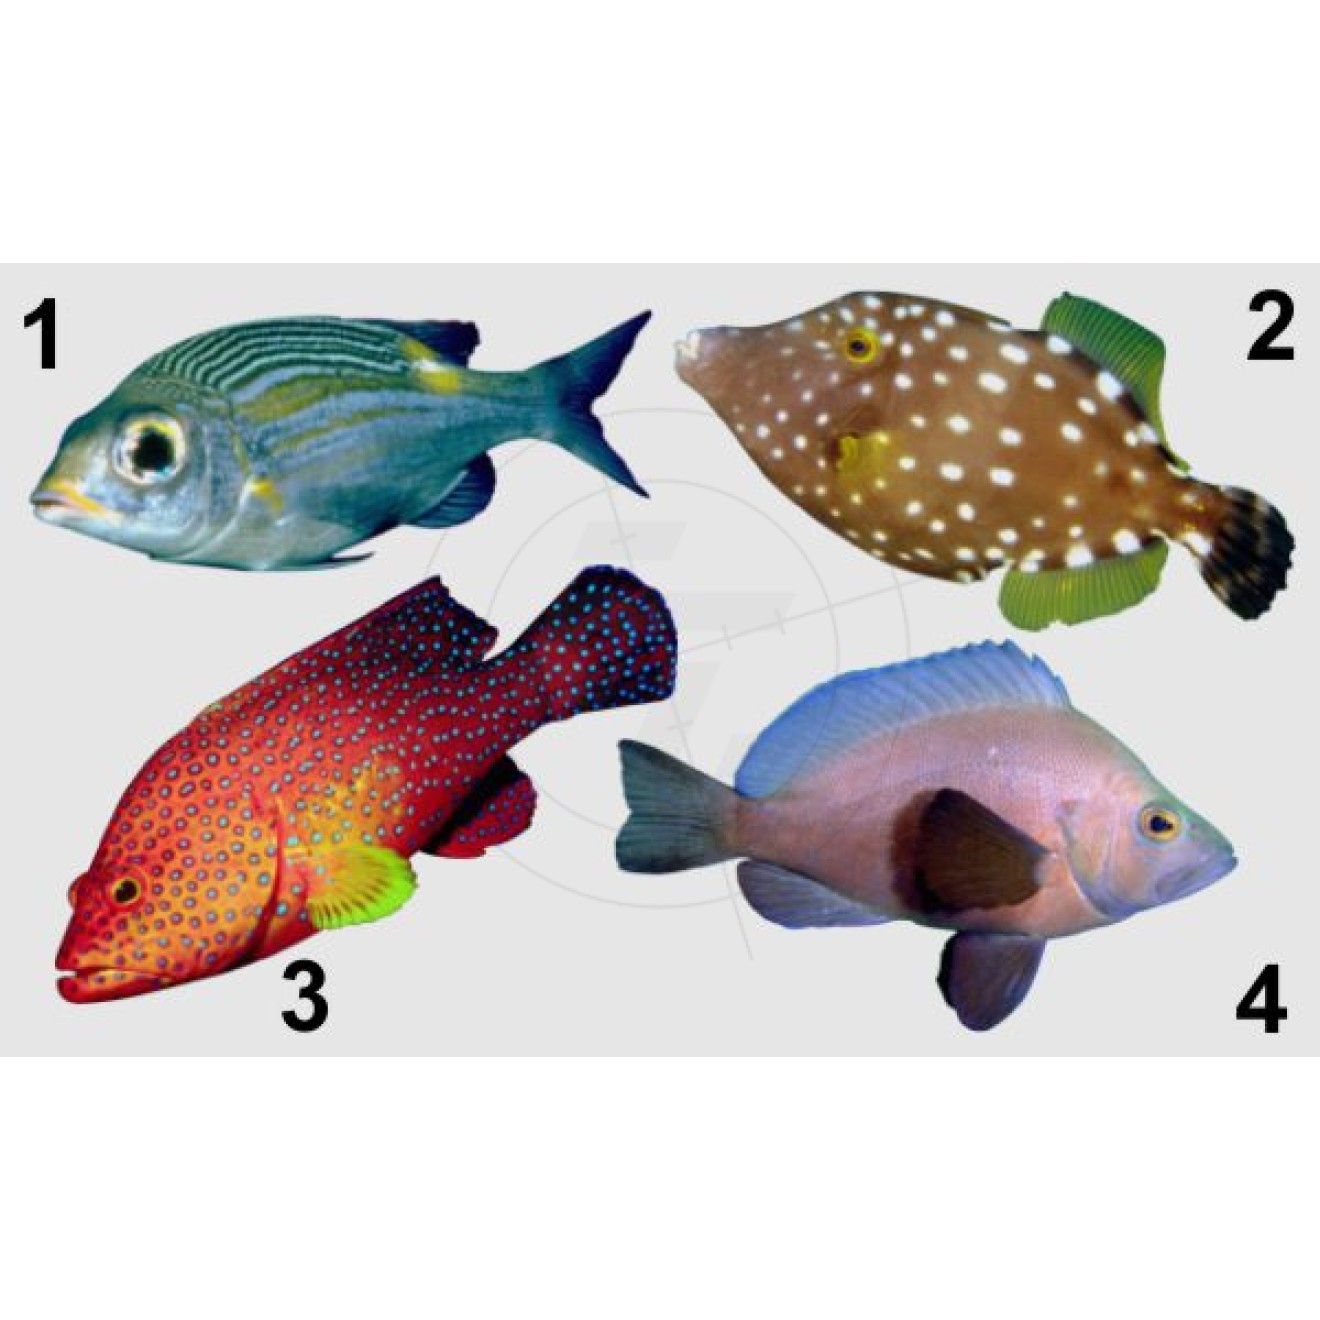 Fish, various species